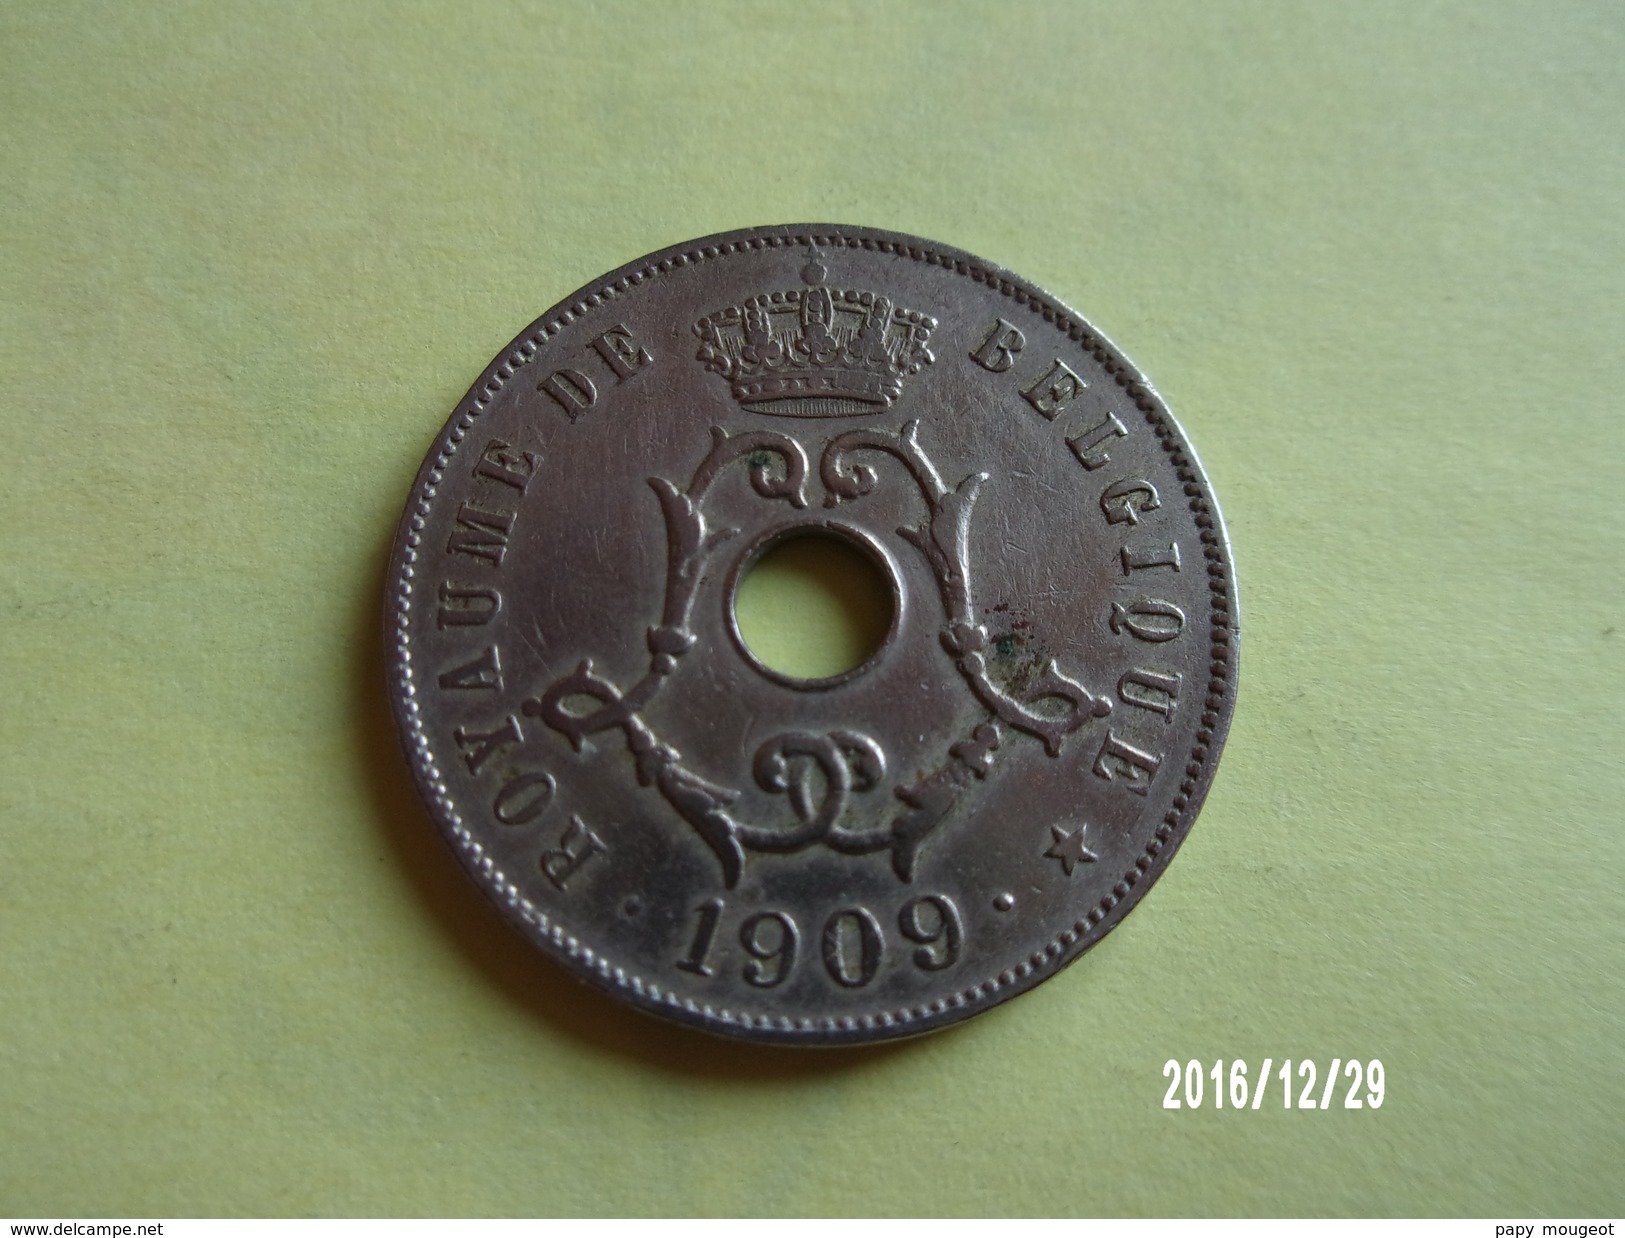 KM 62 - 25 Centimes - 1909 - 25 Cents